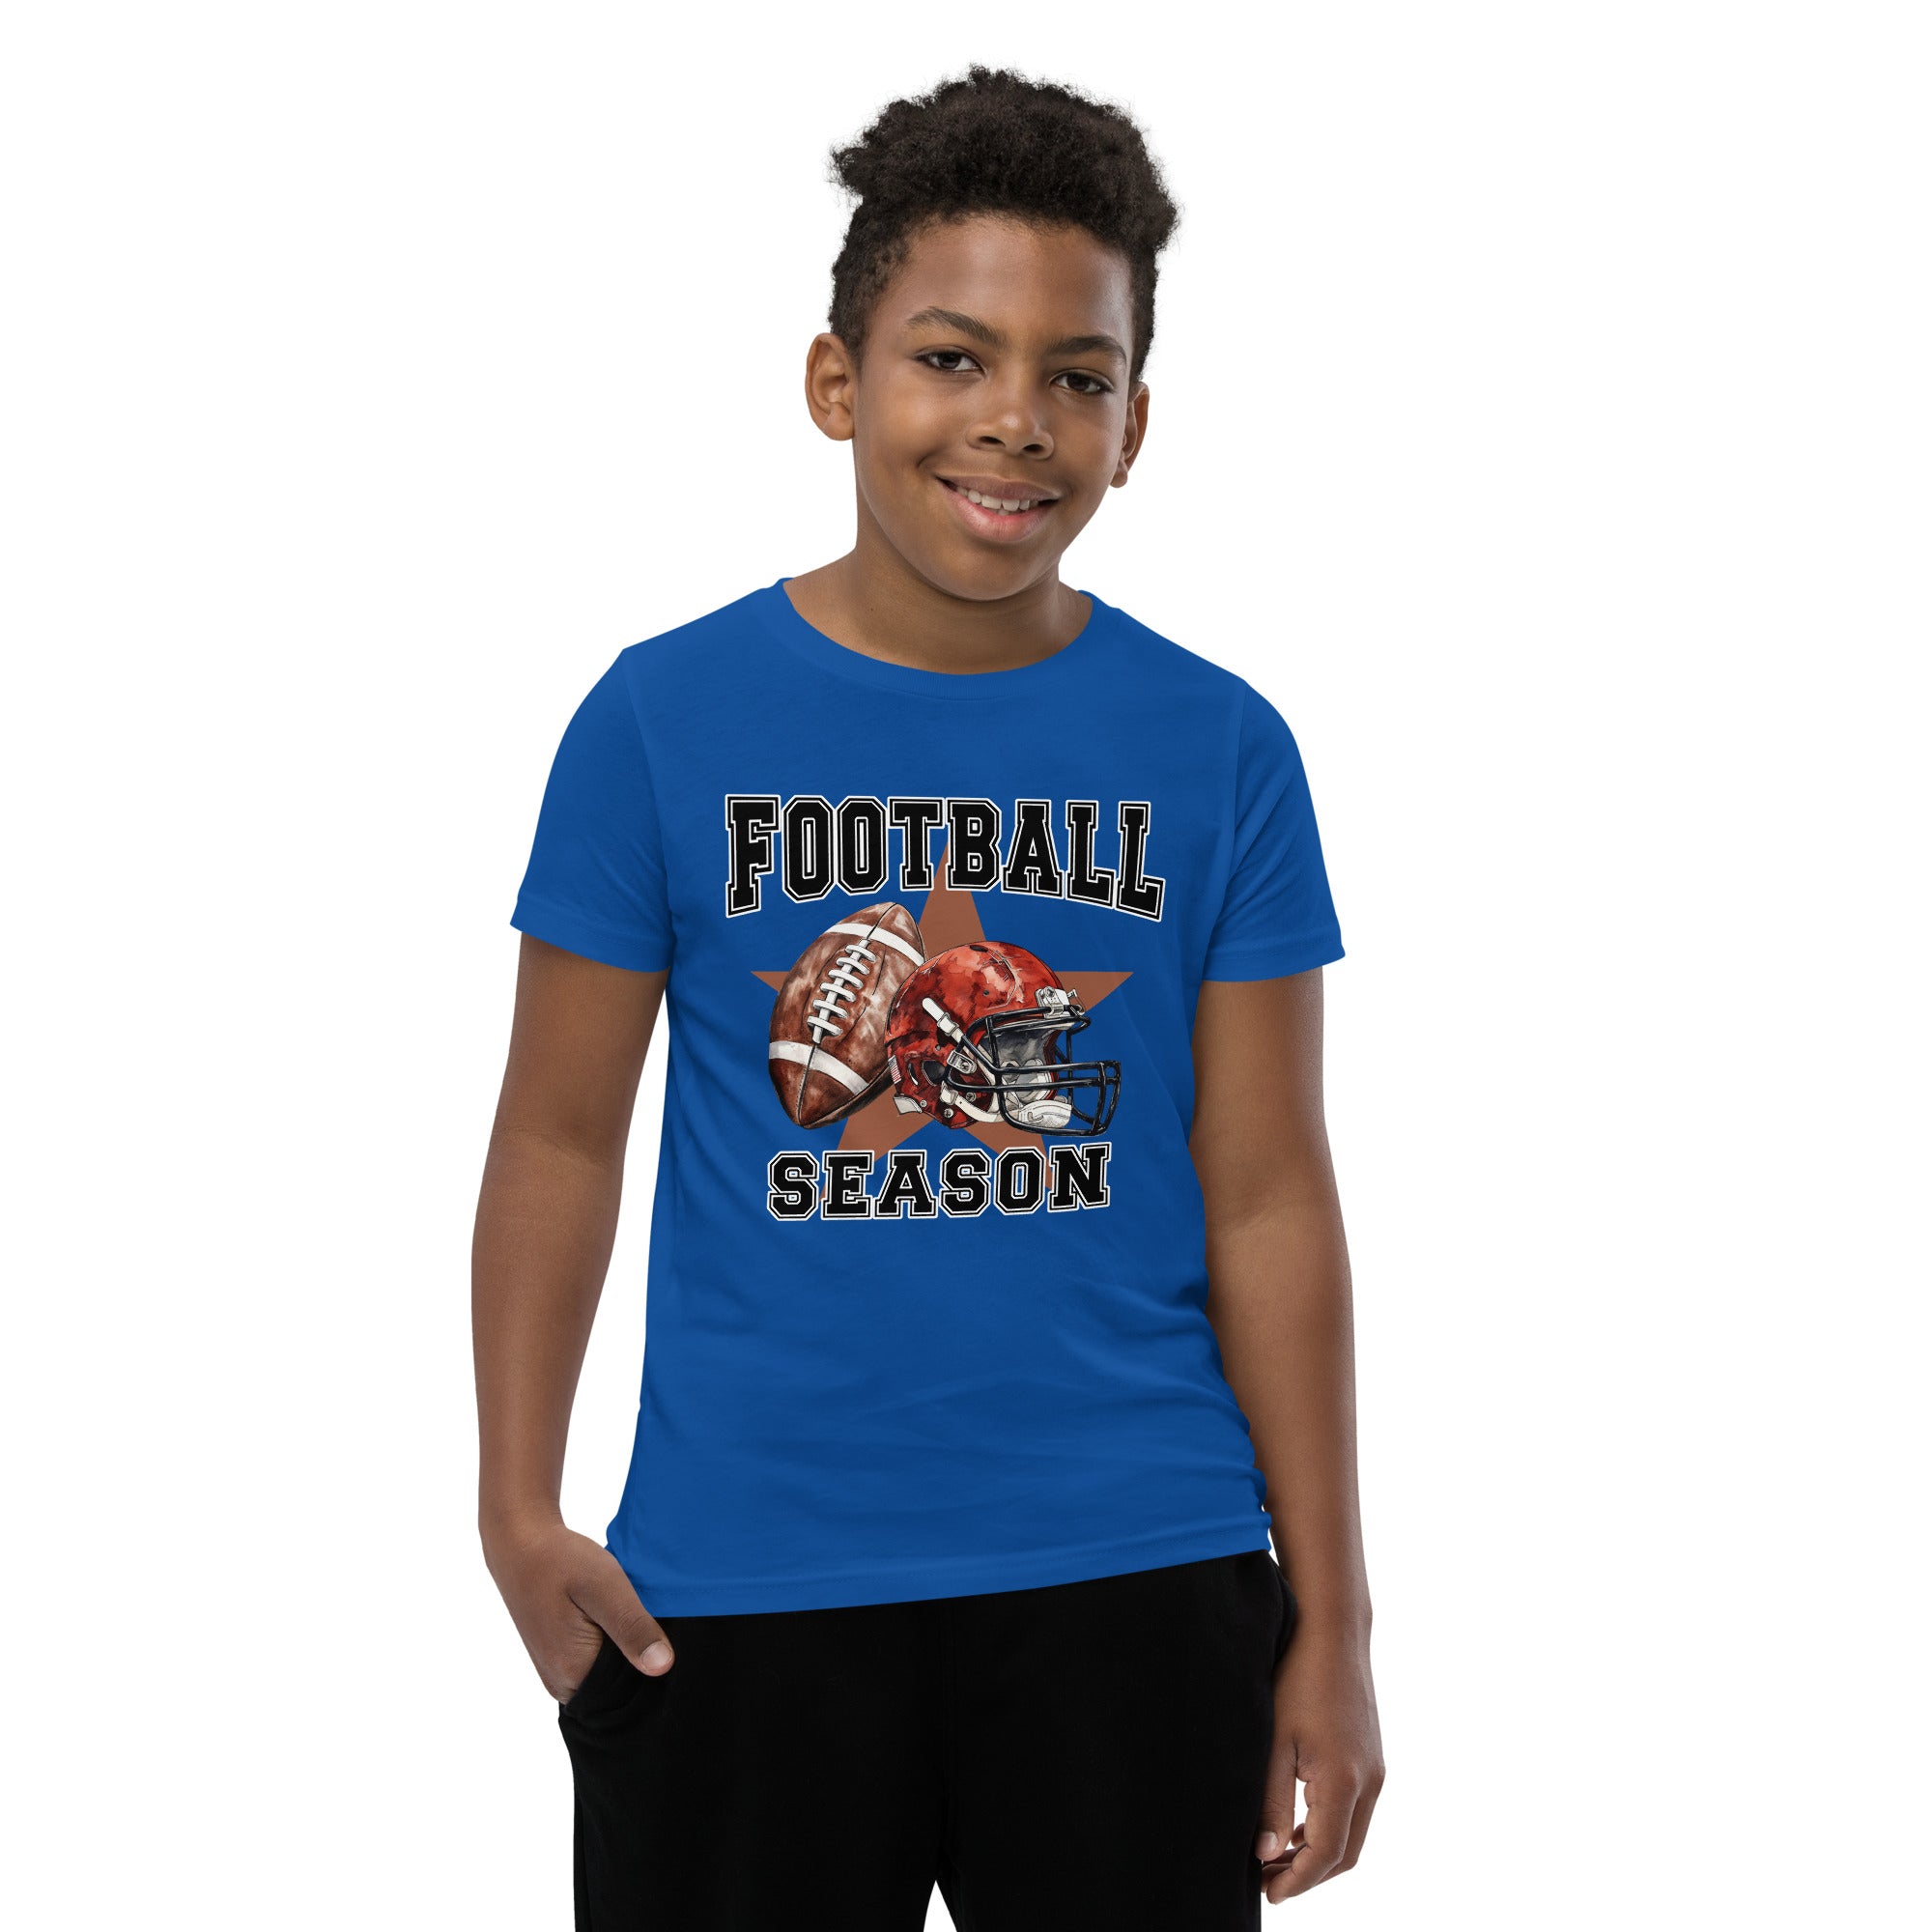 Youth Short Sleeve T-Shirt, Football T shirt, Everyday